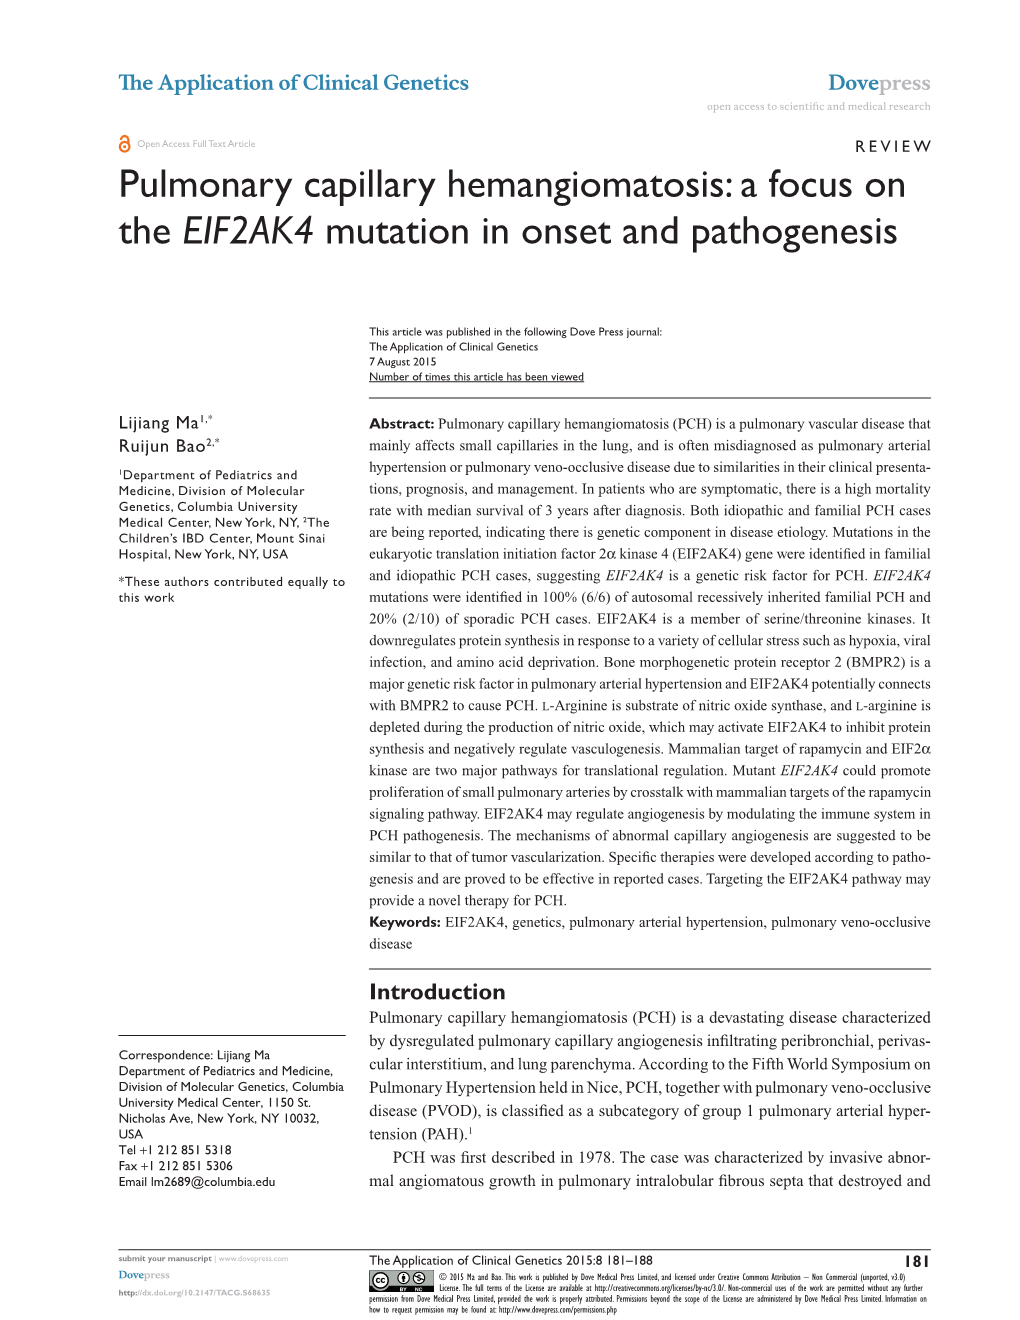 Pulmonary Capillary Hemangiomatosis: a Focus on the EIF2AK4 Mutation in Onset and Pathogenesis